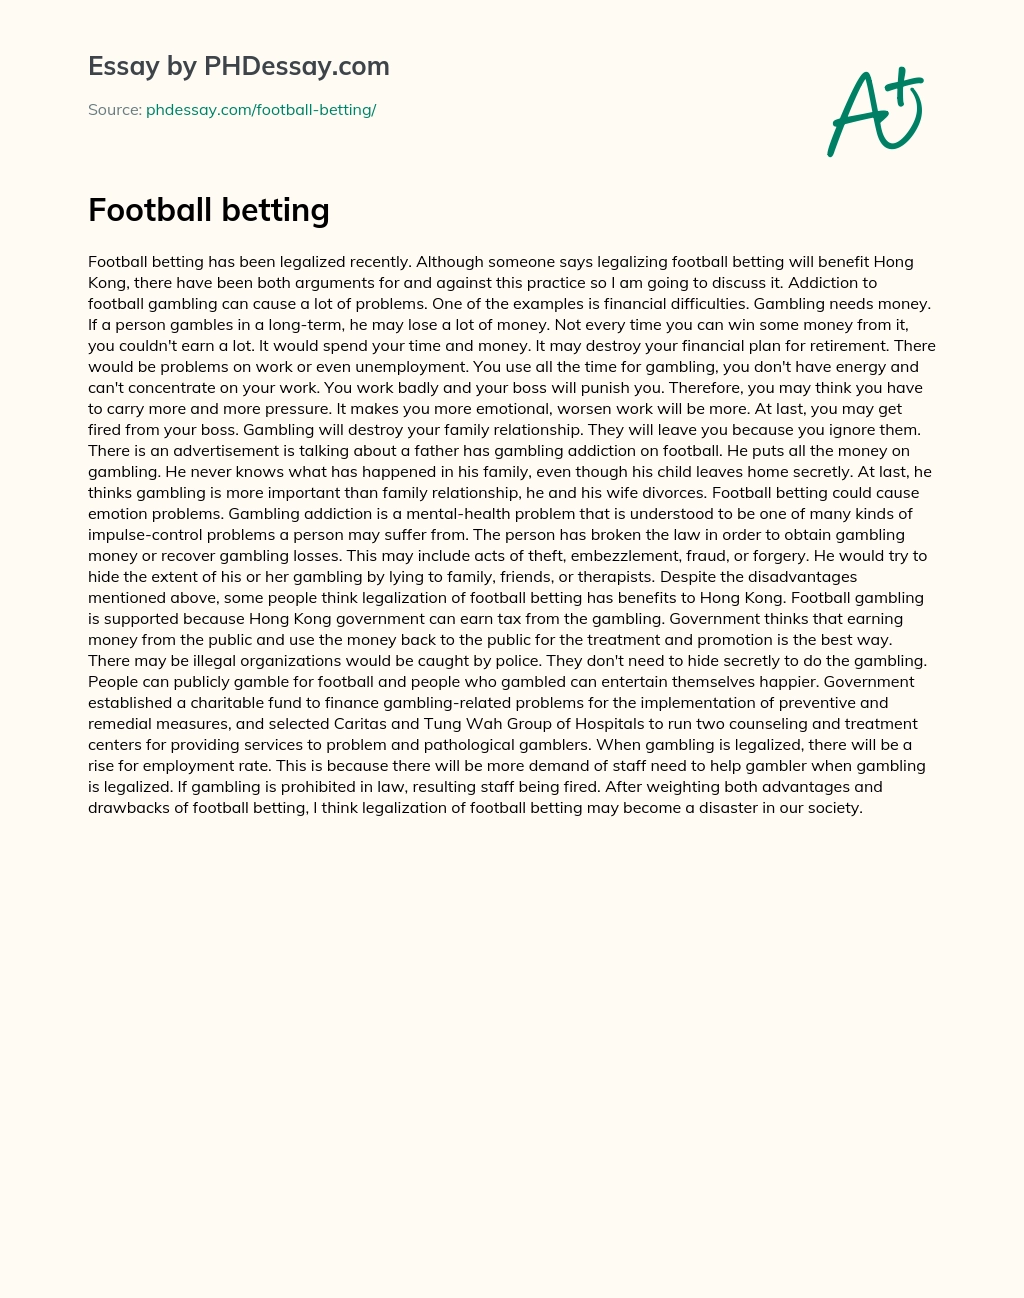 Football betting essay